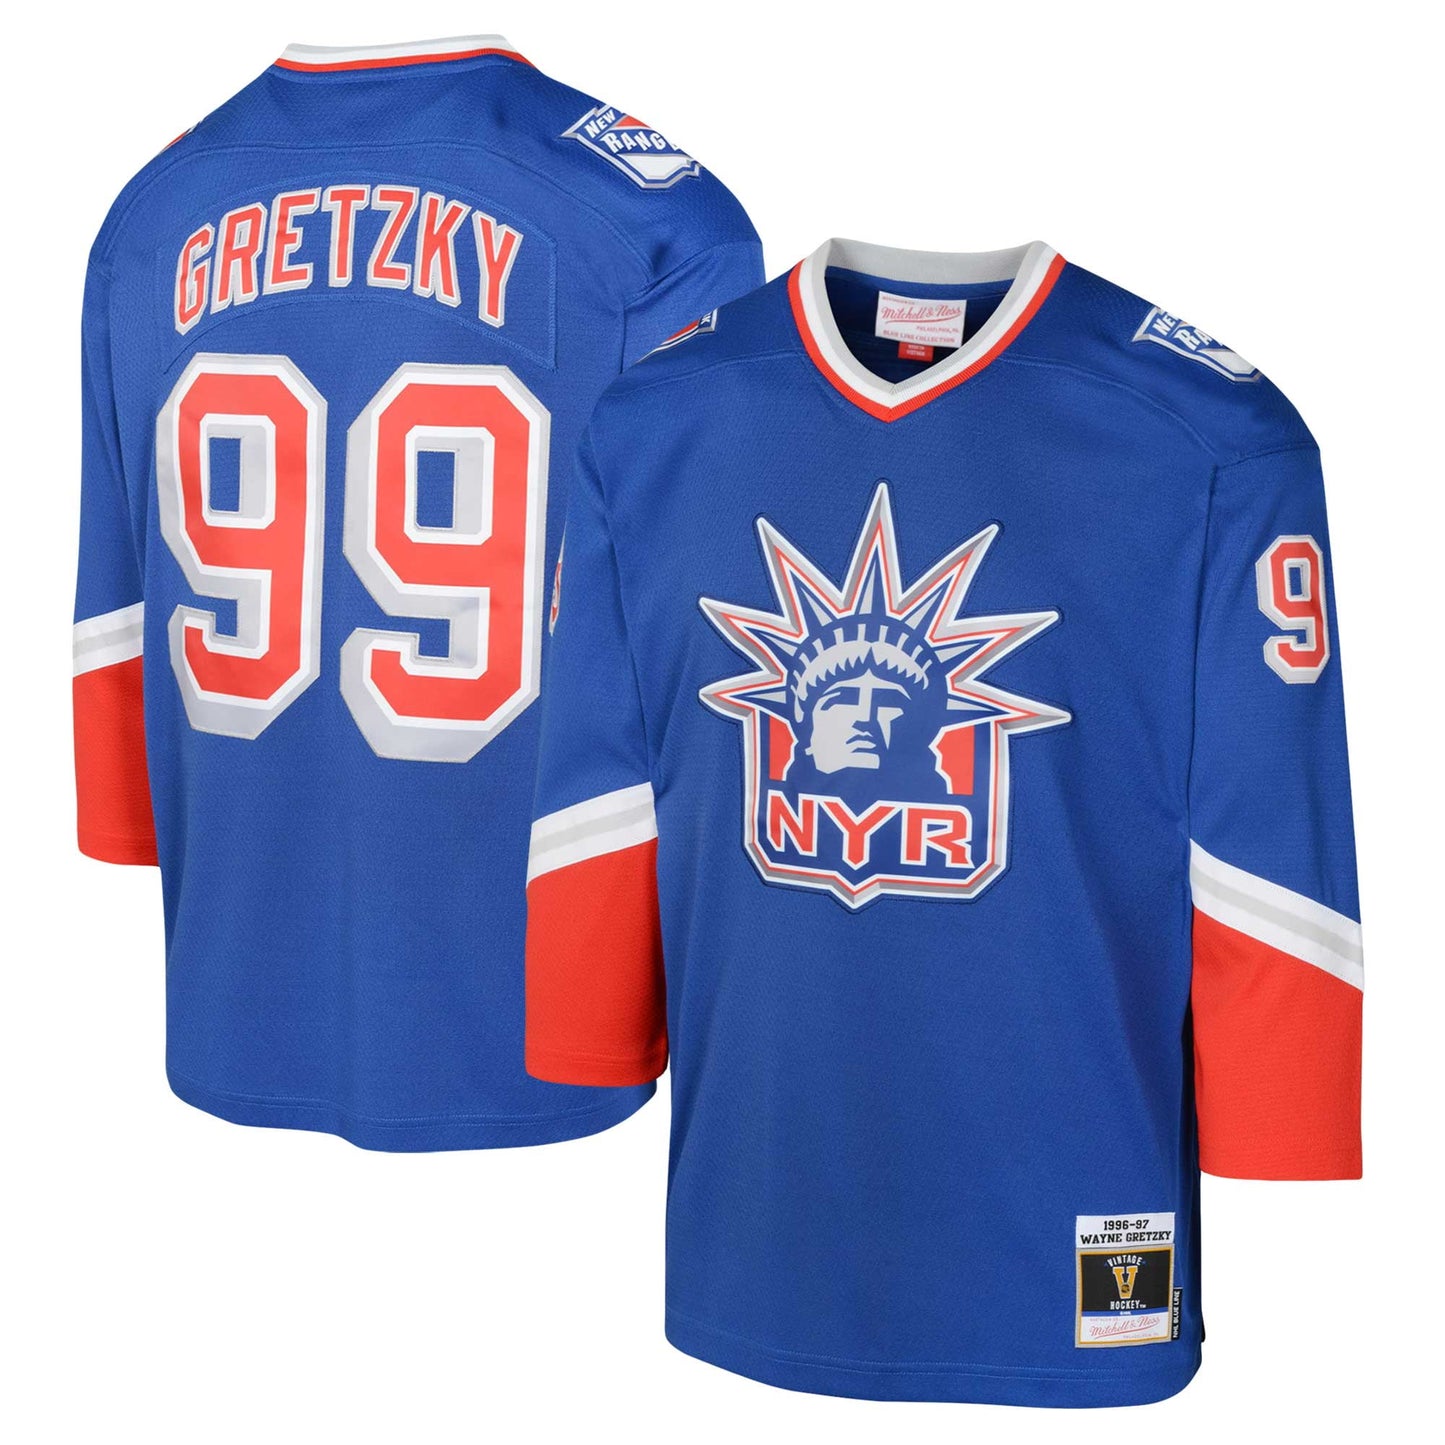 Youth Mitchell & Ness Wayne Gretzky Royal New York Rangers 1996 Blue Line Player Jersey